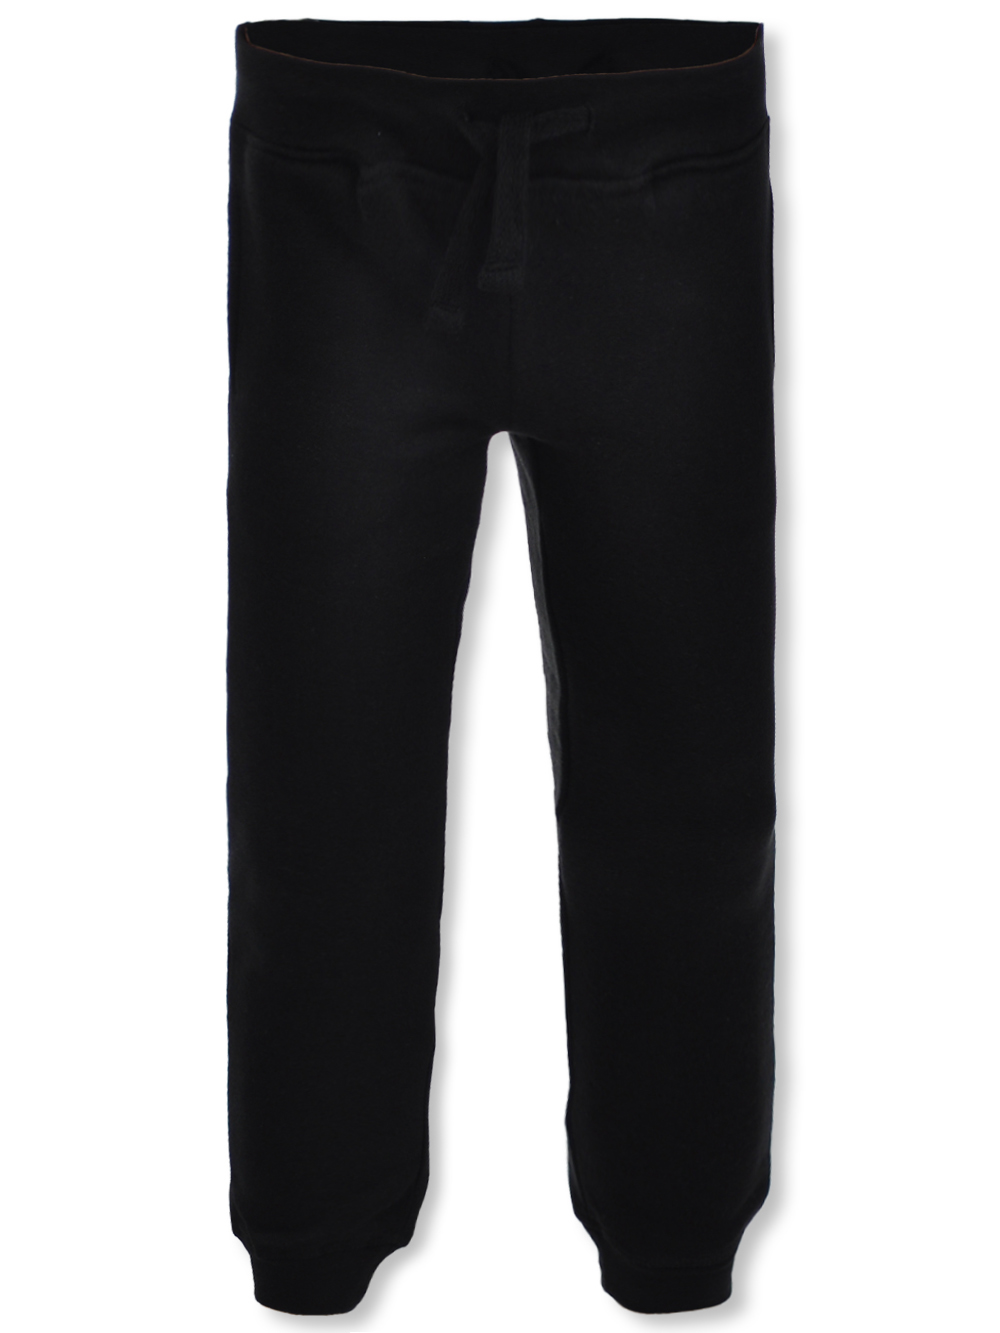 RBX Gray Active Pants Size XL - 69% off